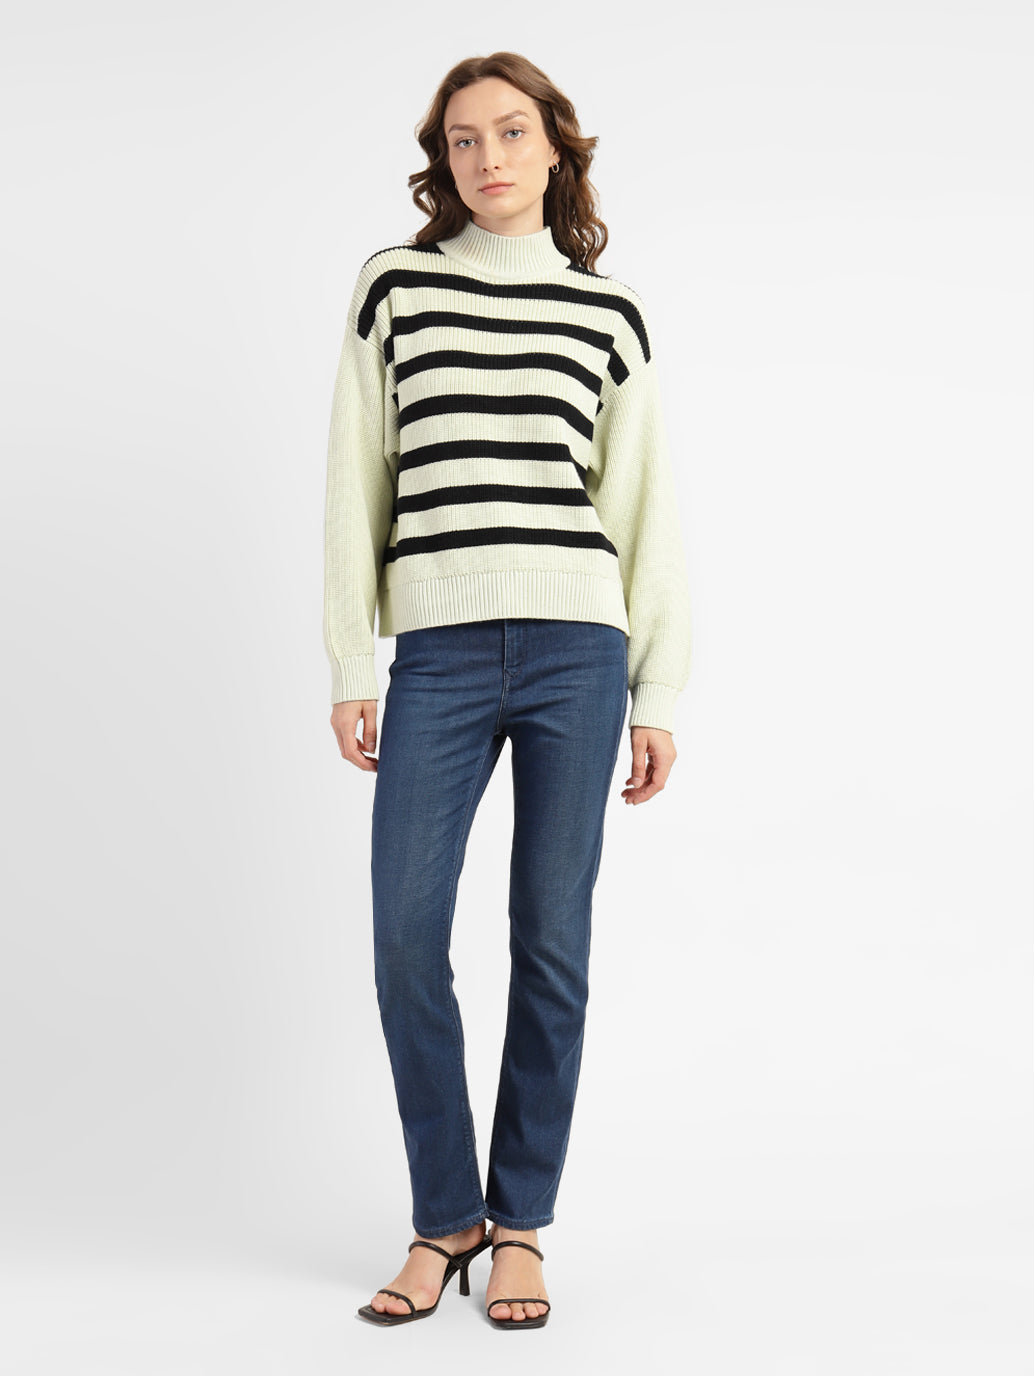 Women's Striped High Neck Sweater